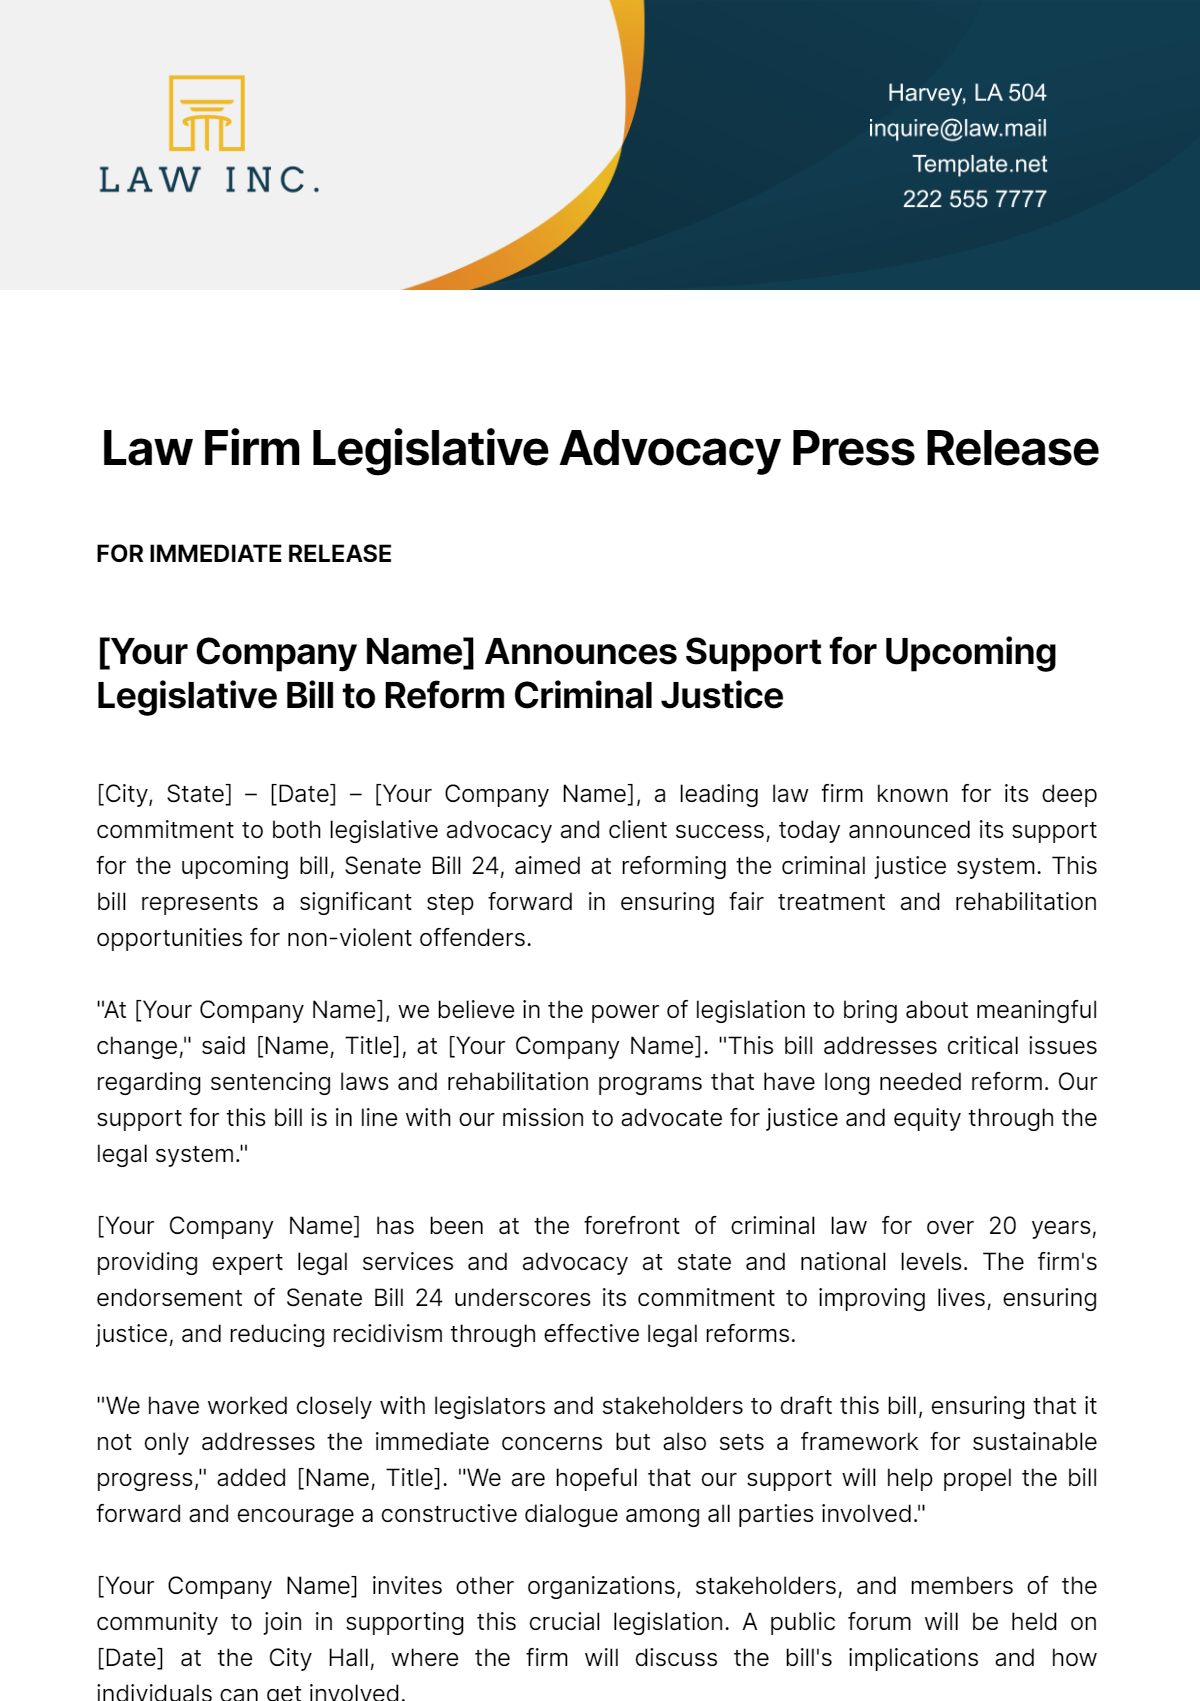 Law Firm Legislative Advocacy Press Release Template